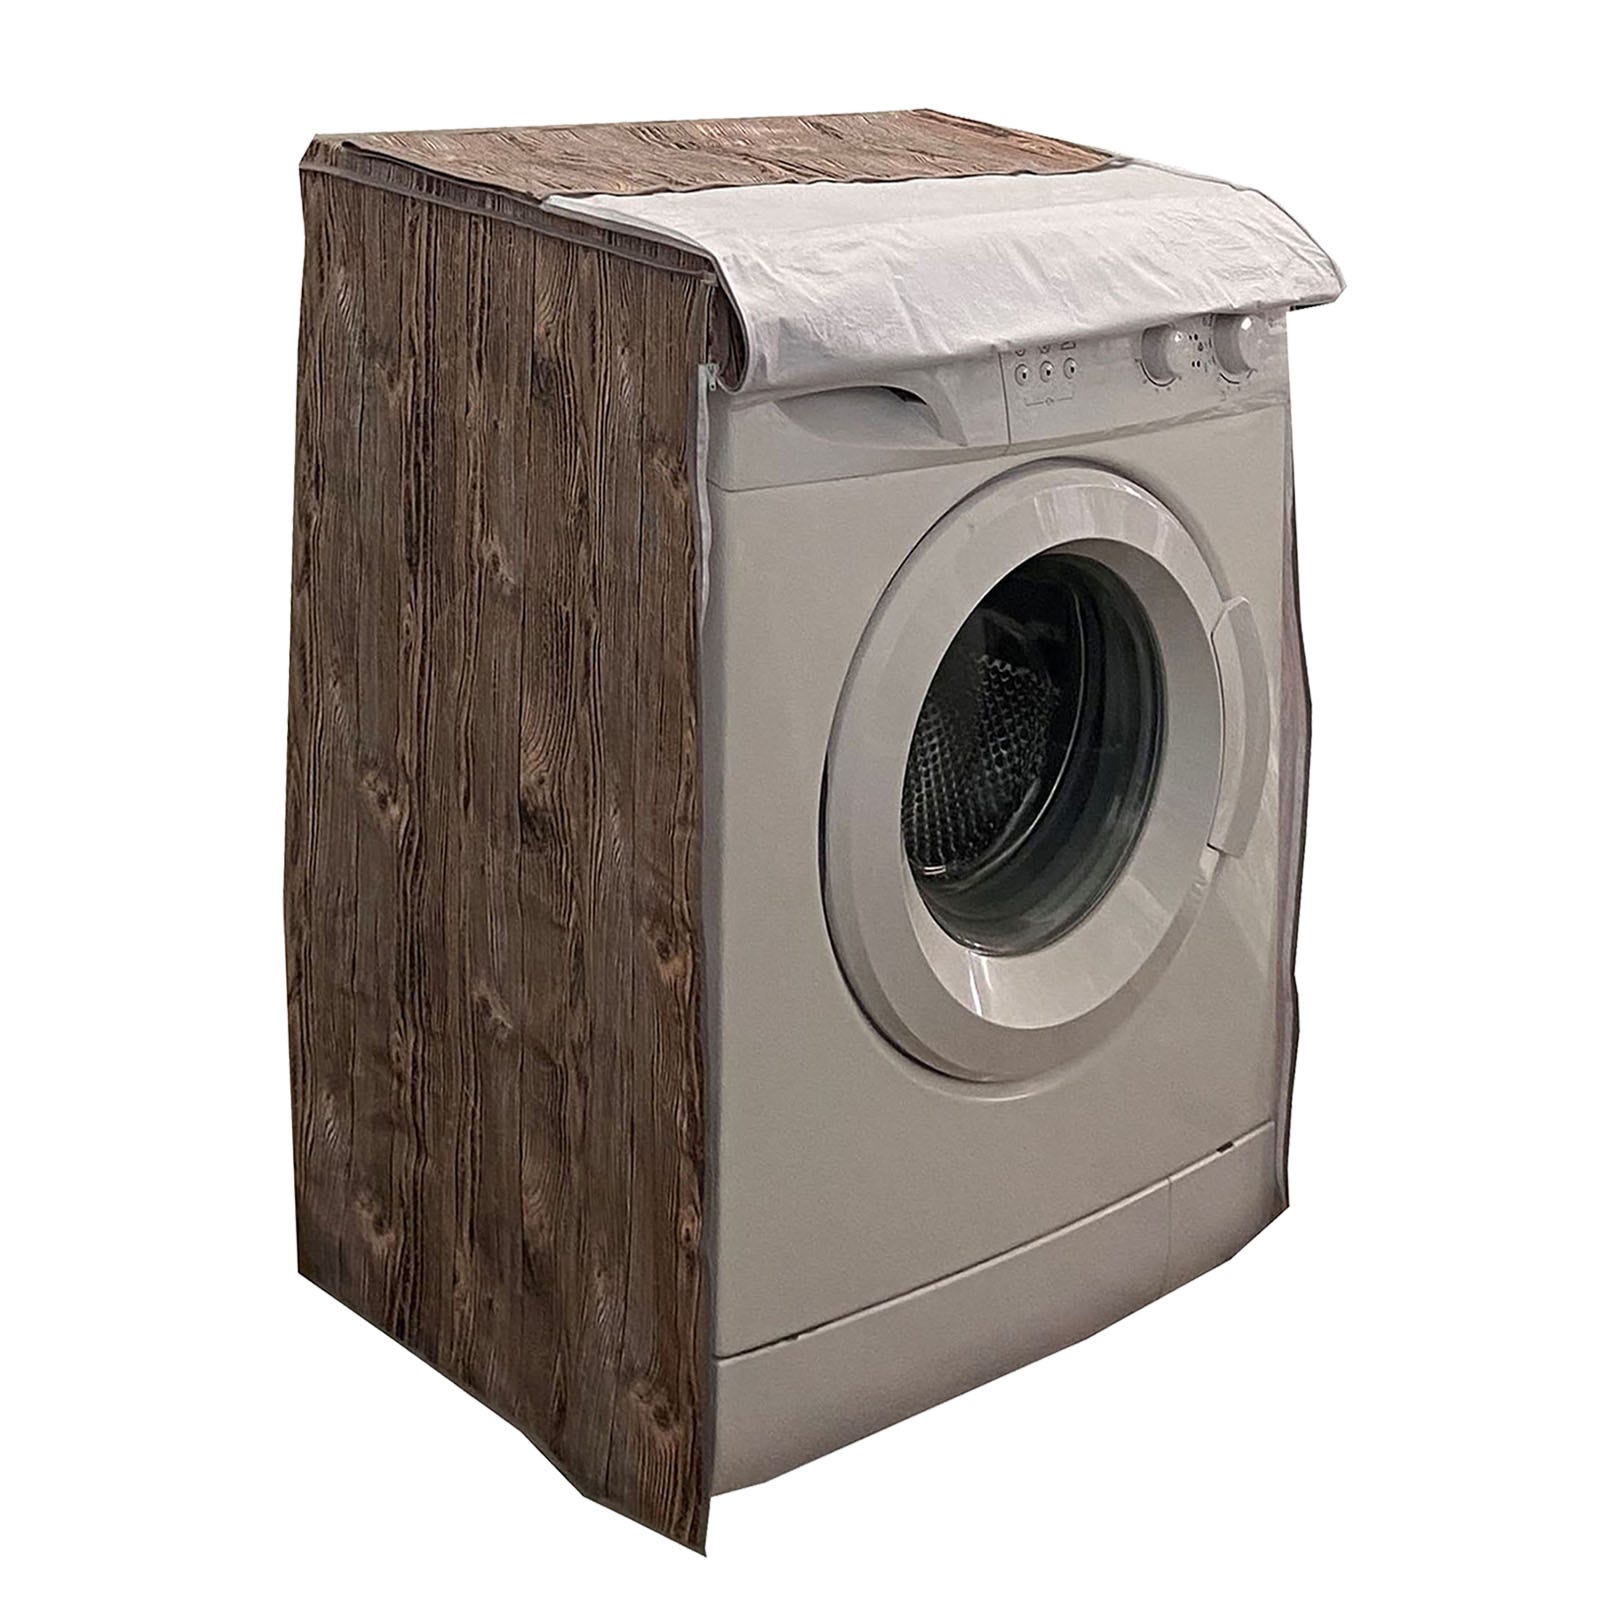 Funda para lavadora exterior impermeable carga frontal - madera 0501001-1